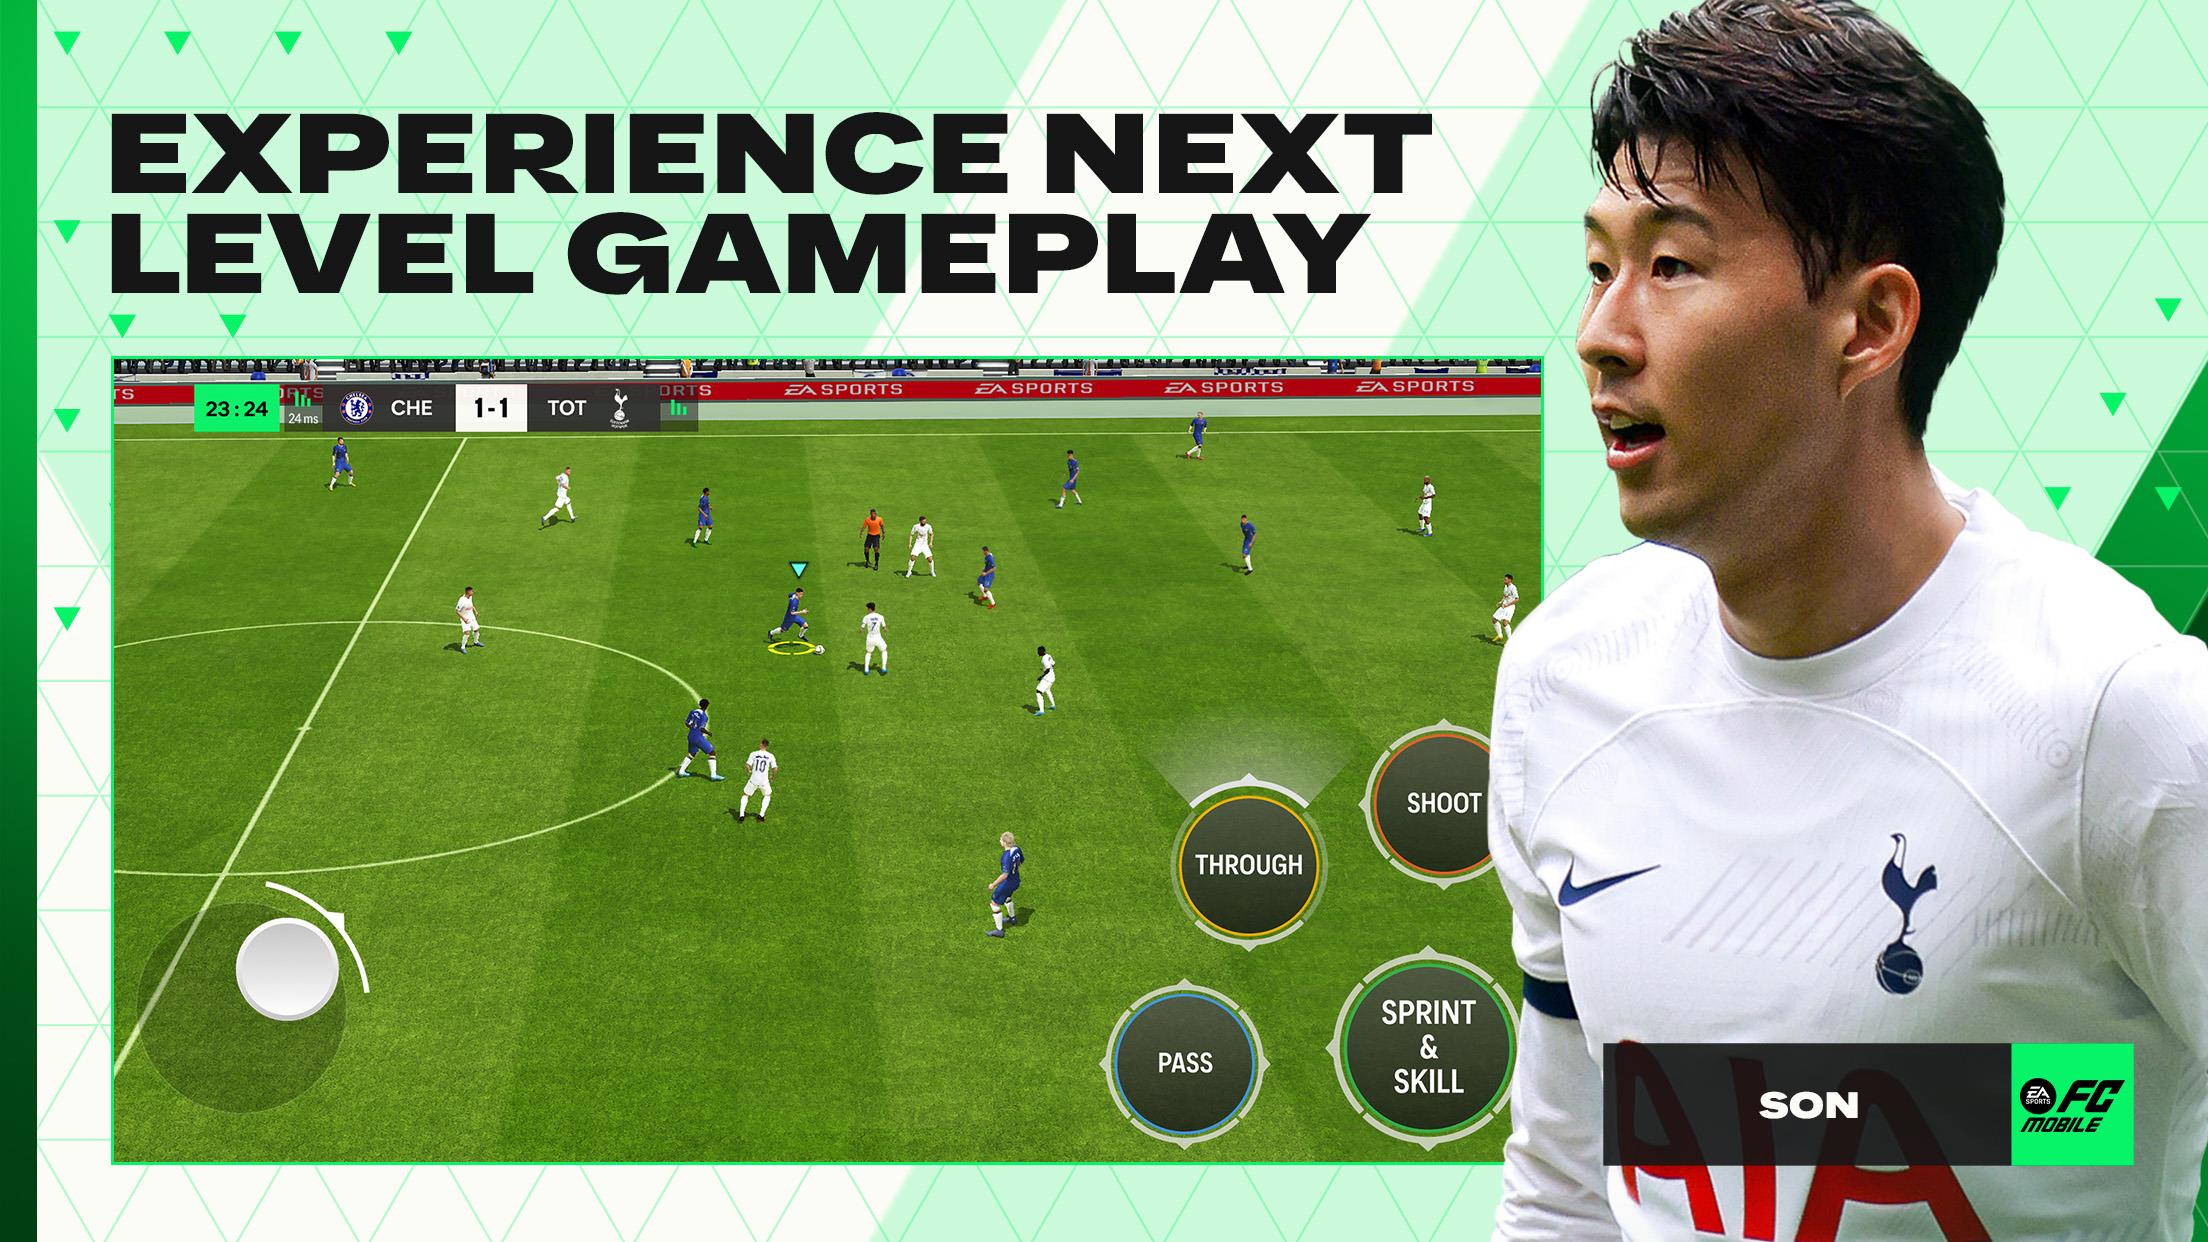 EA SPORTS FC™ Mobile Soccer Screenshot 5